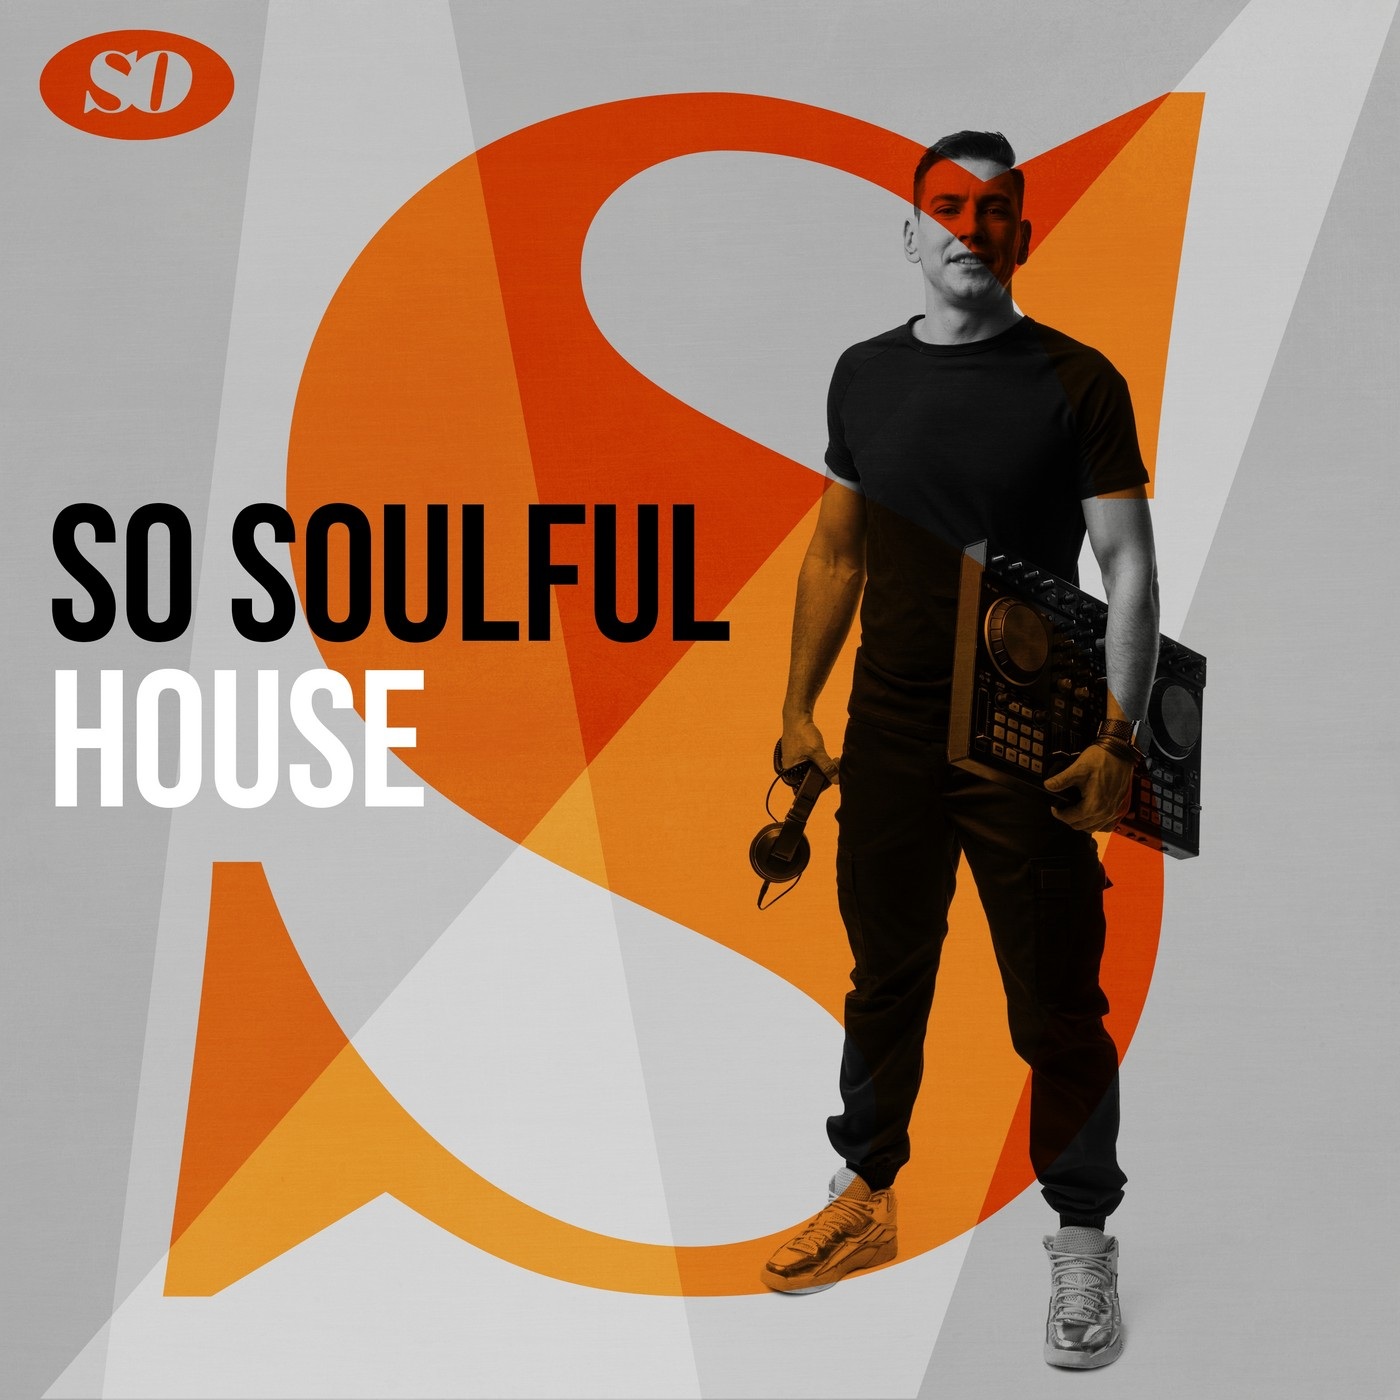 VA - So Soulful: House / Warner Music Group